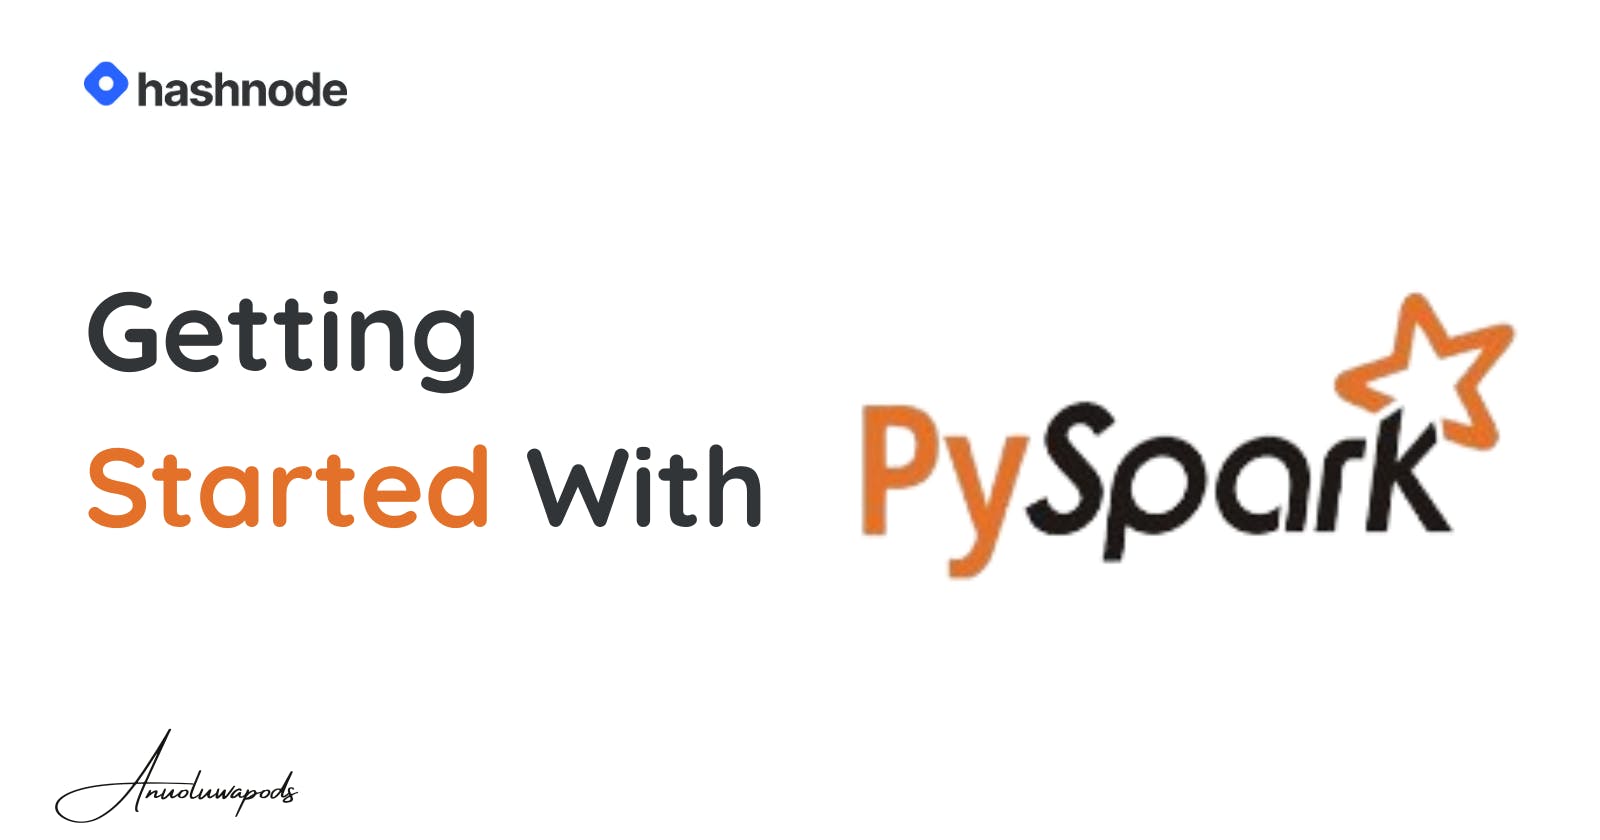 Loading Data From PostgreSQL to PySpark